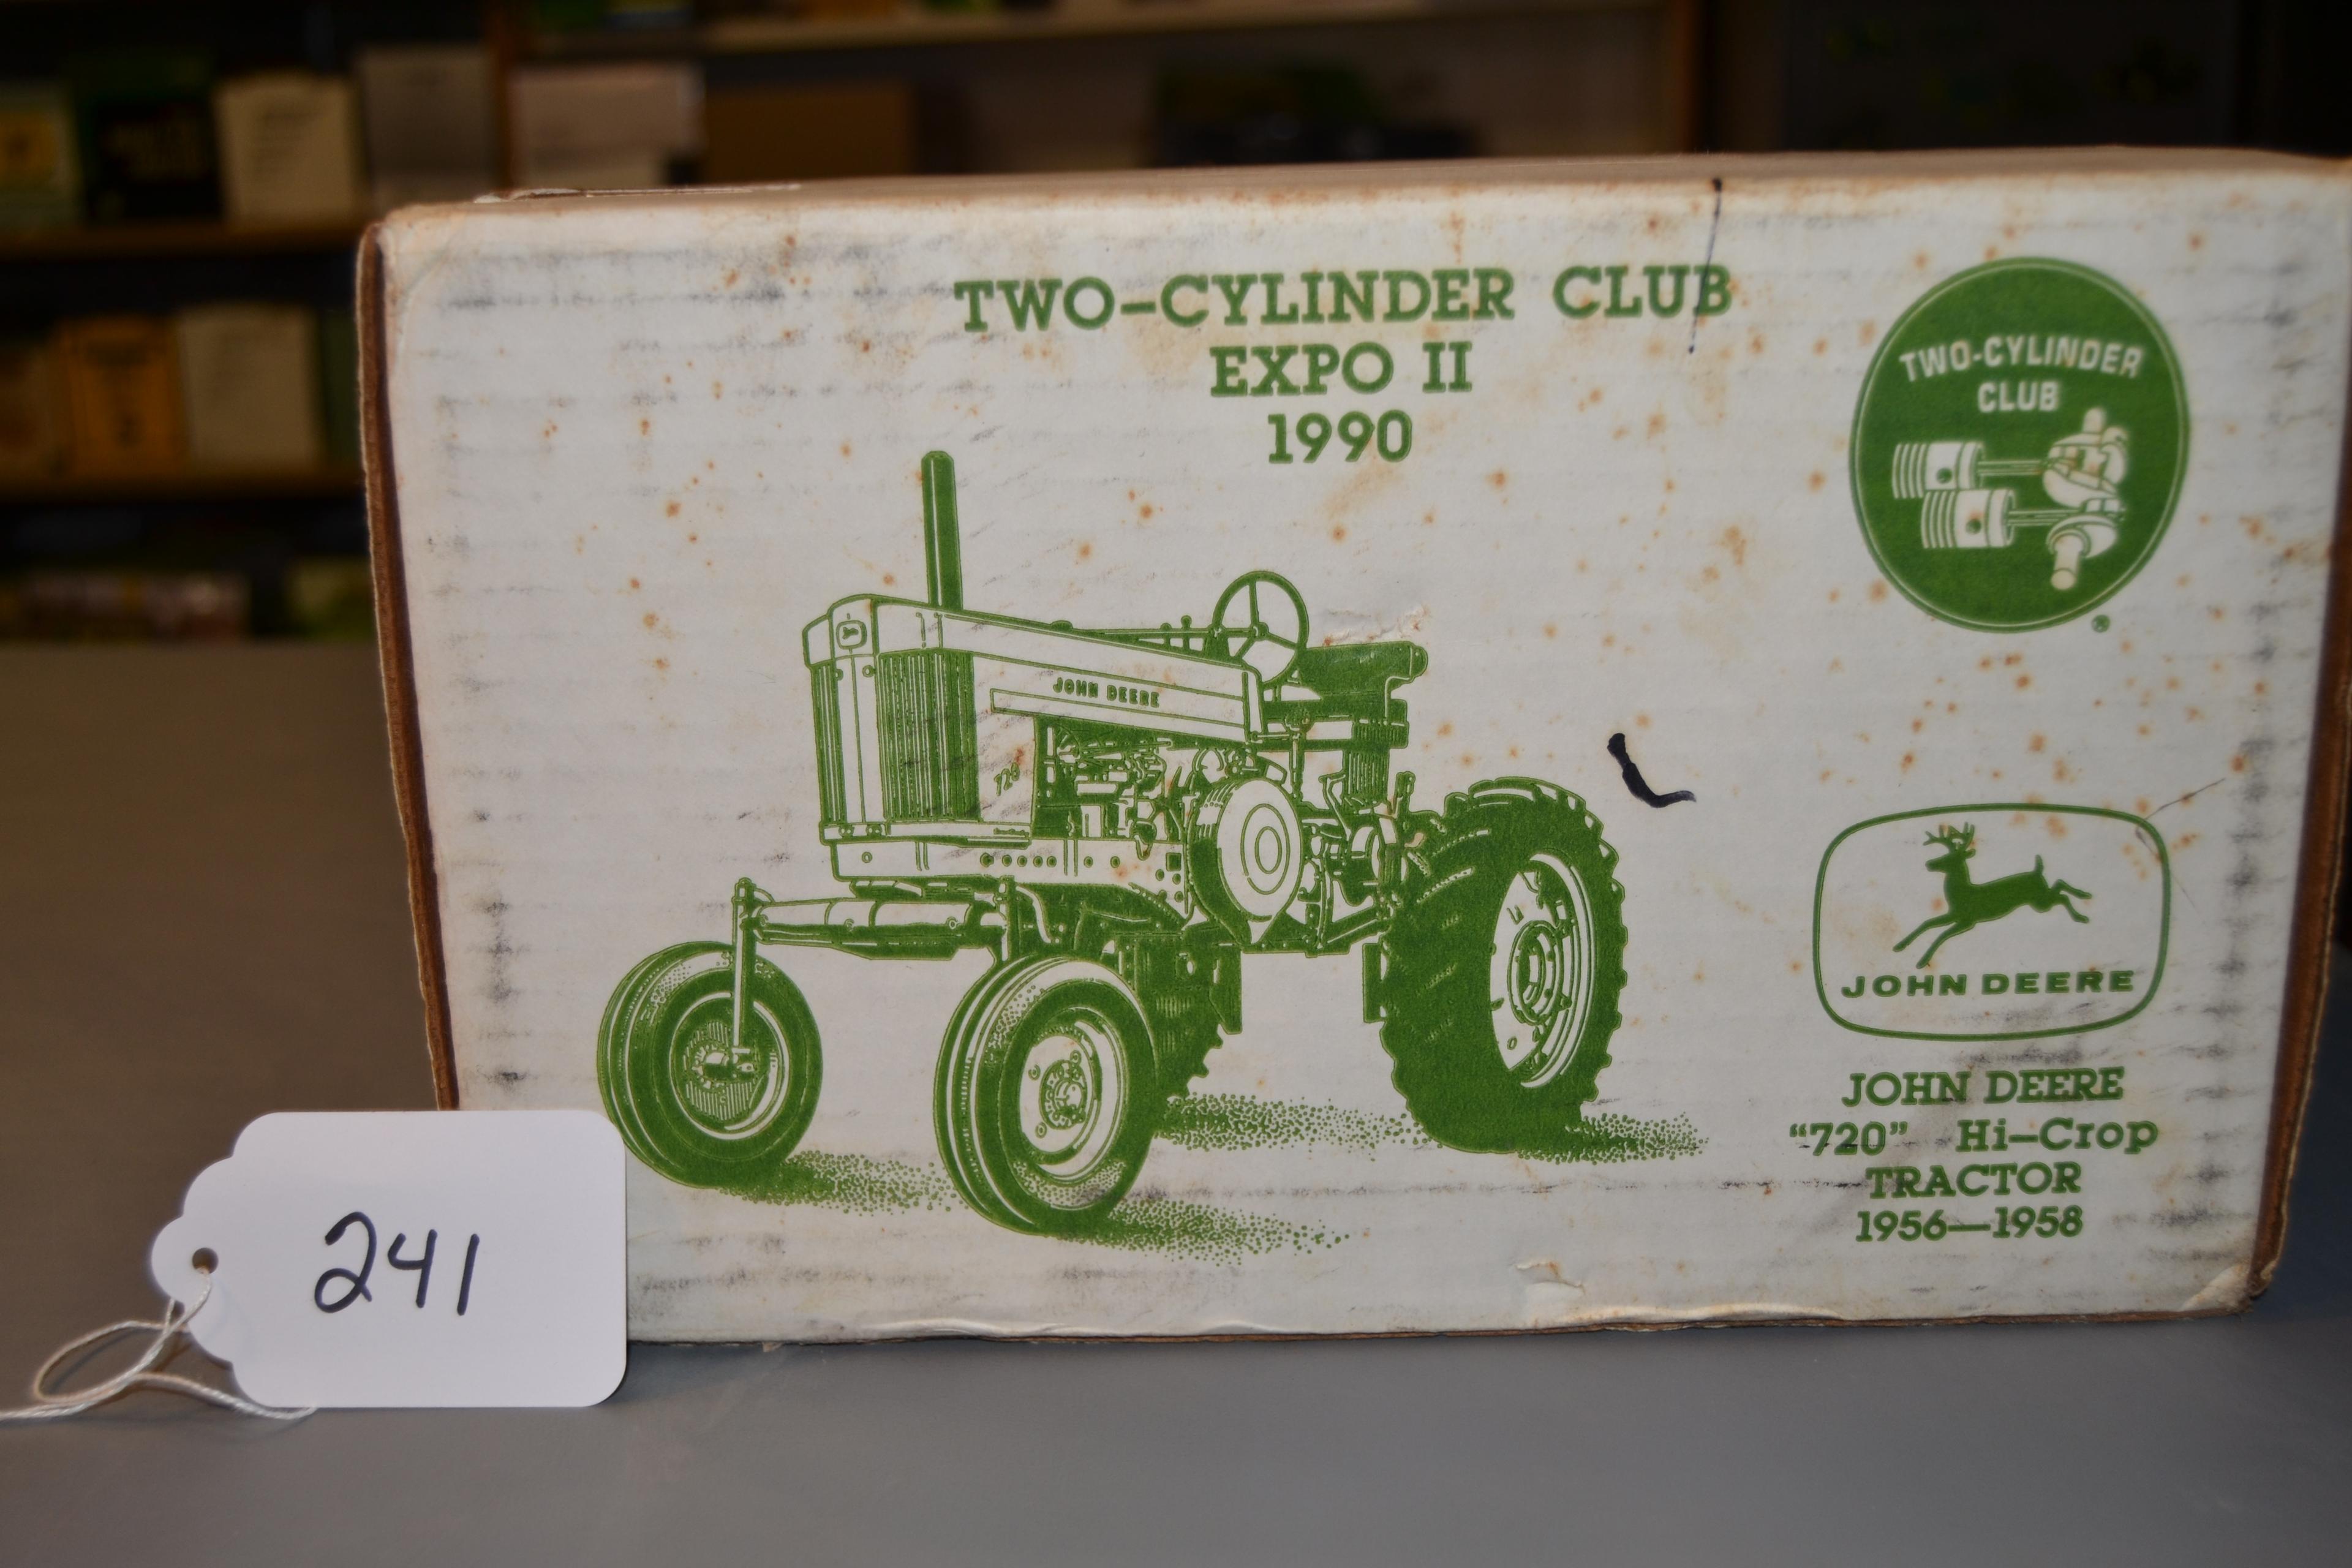 2 cylinder club expo II 1990 - diecast JD "720" hi-crop tractor W/box